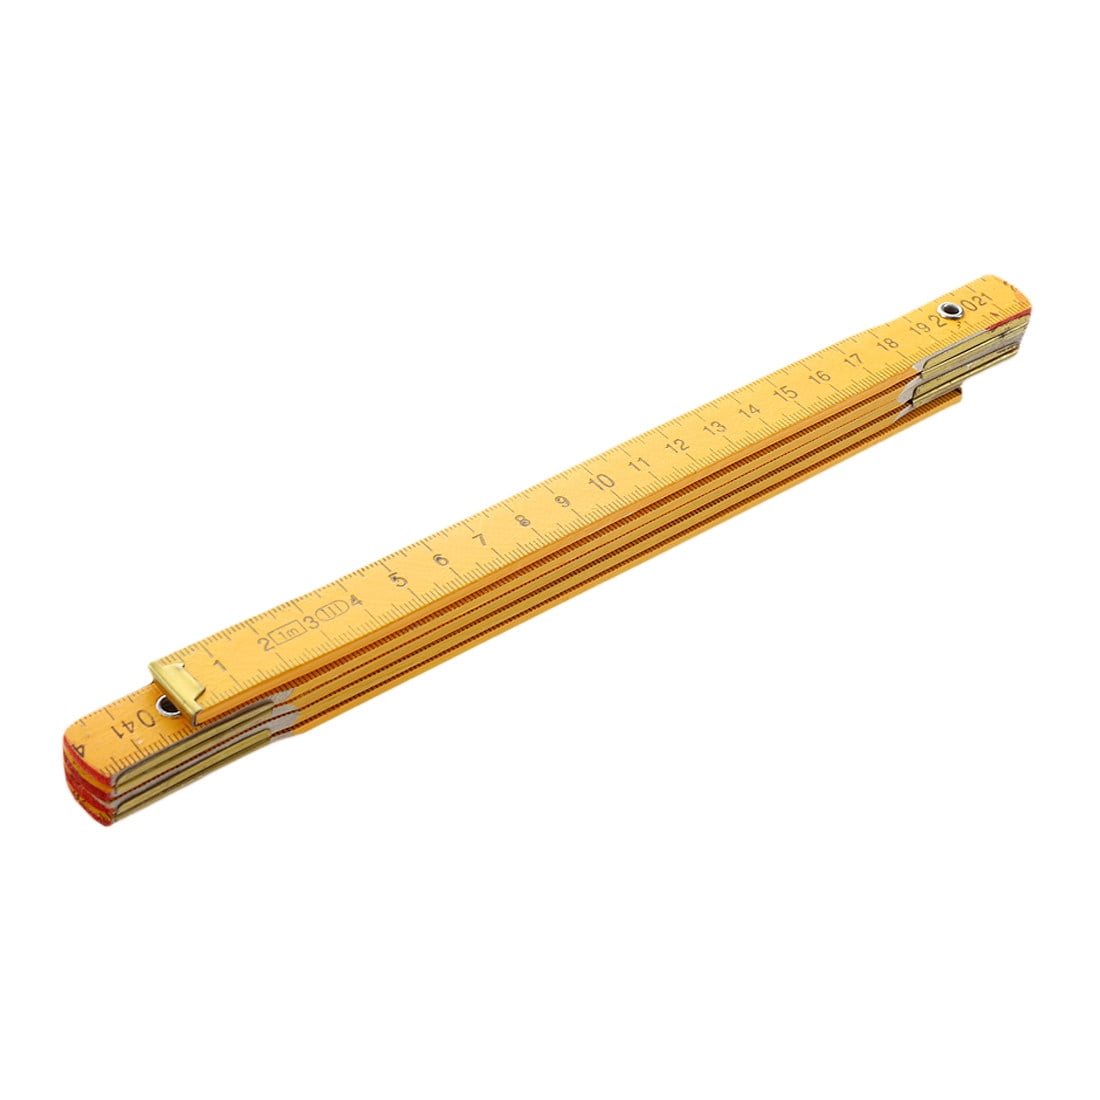 Gaetooely Portable Carpenter Wooden Folding Ruler 100cm/39inch